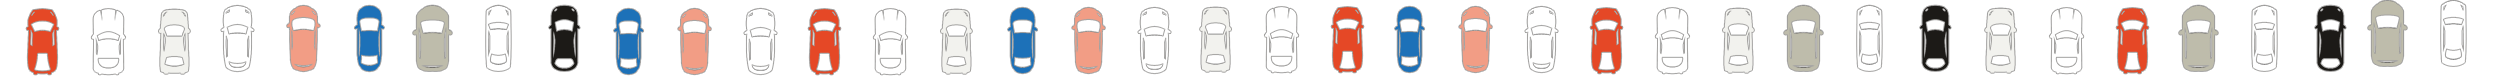 Cars graphic